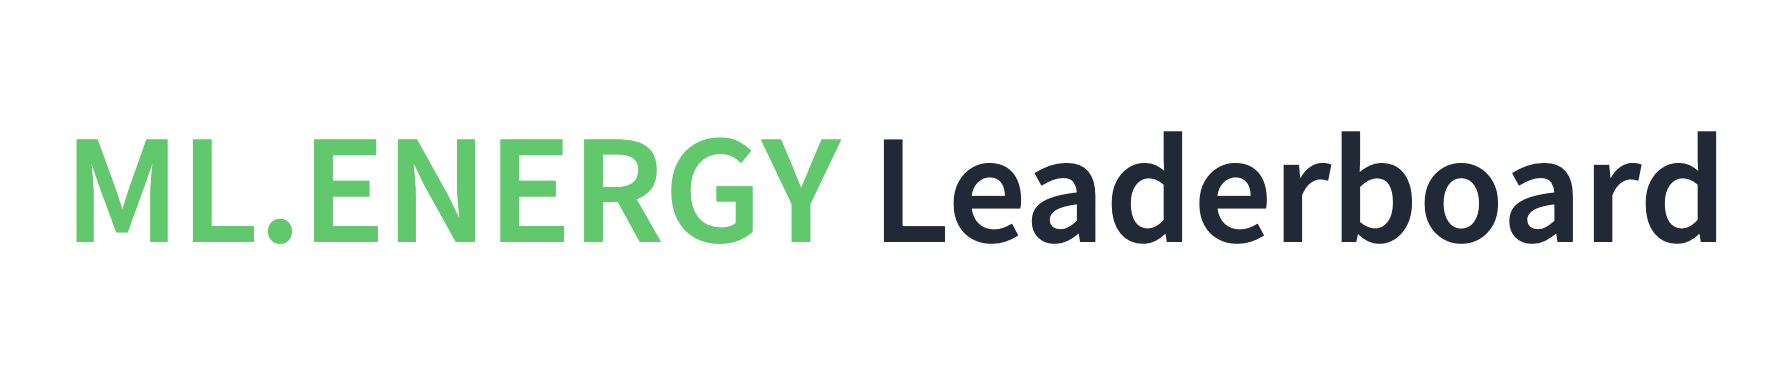 Leaderboard logo